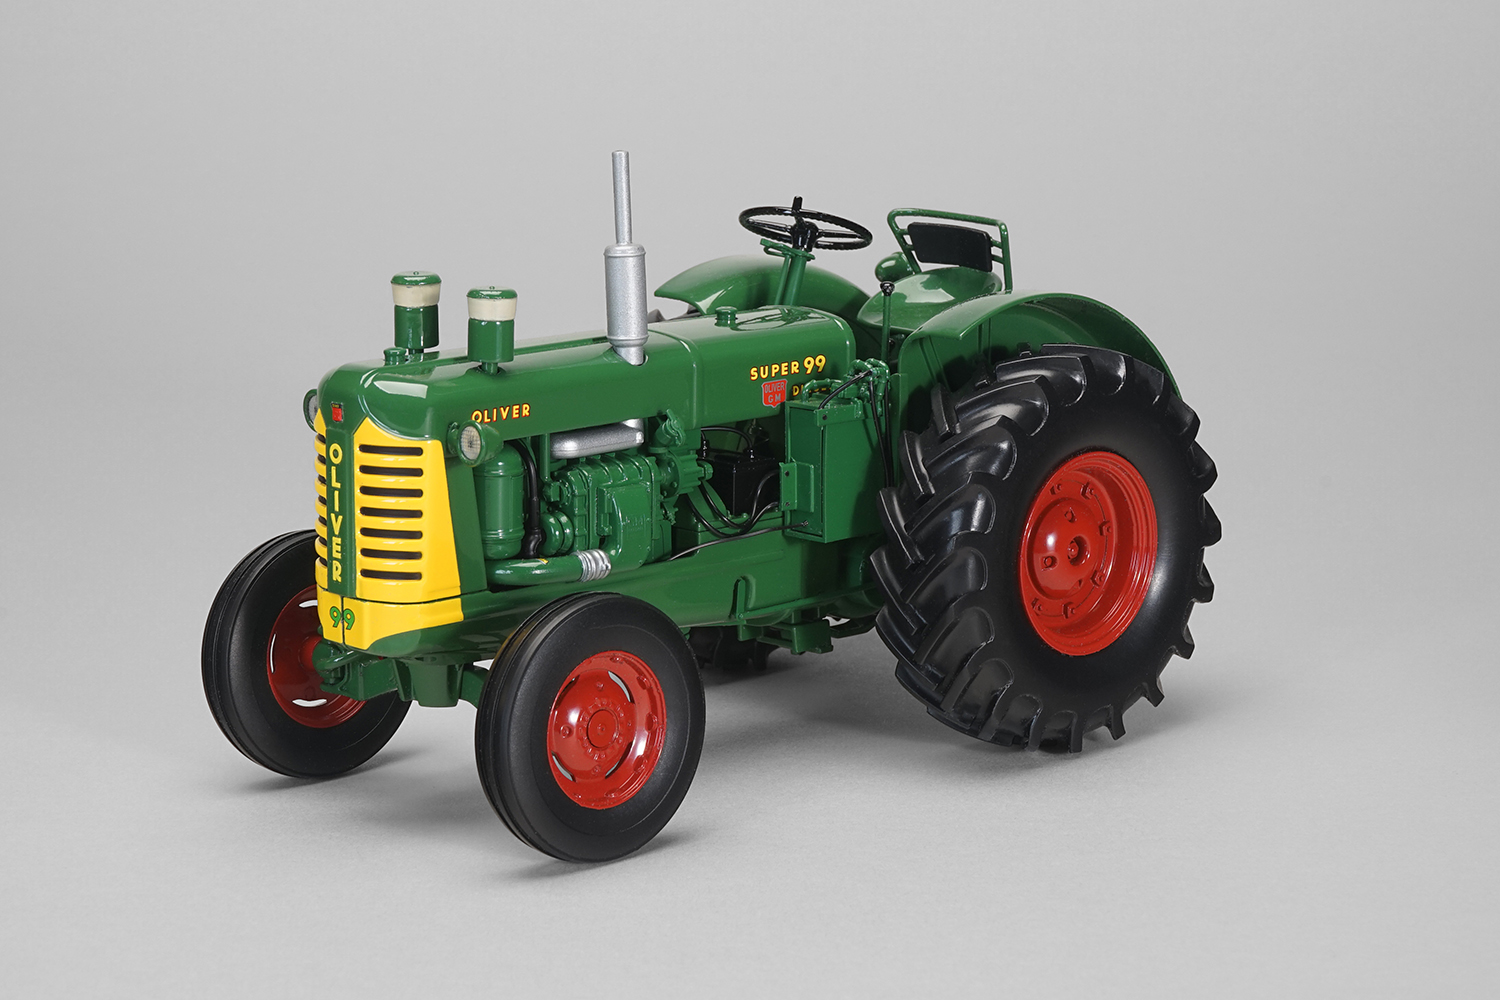 spec cast toy tractors